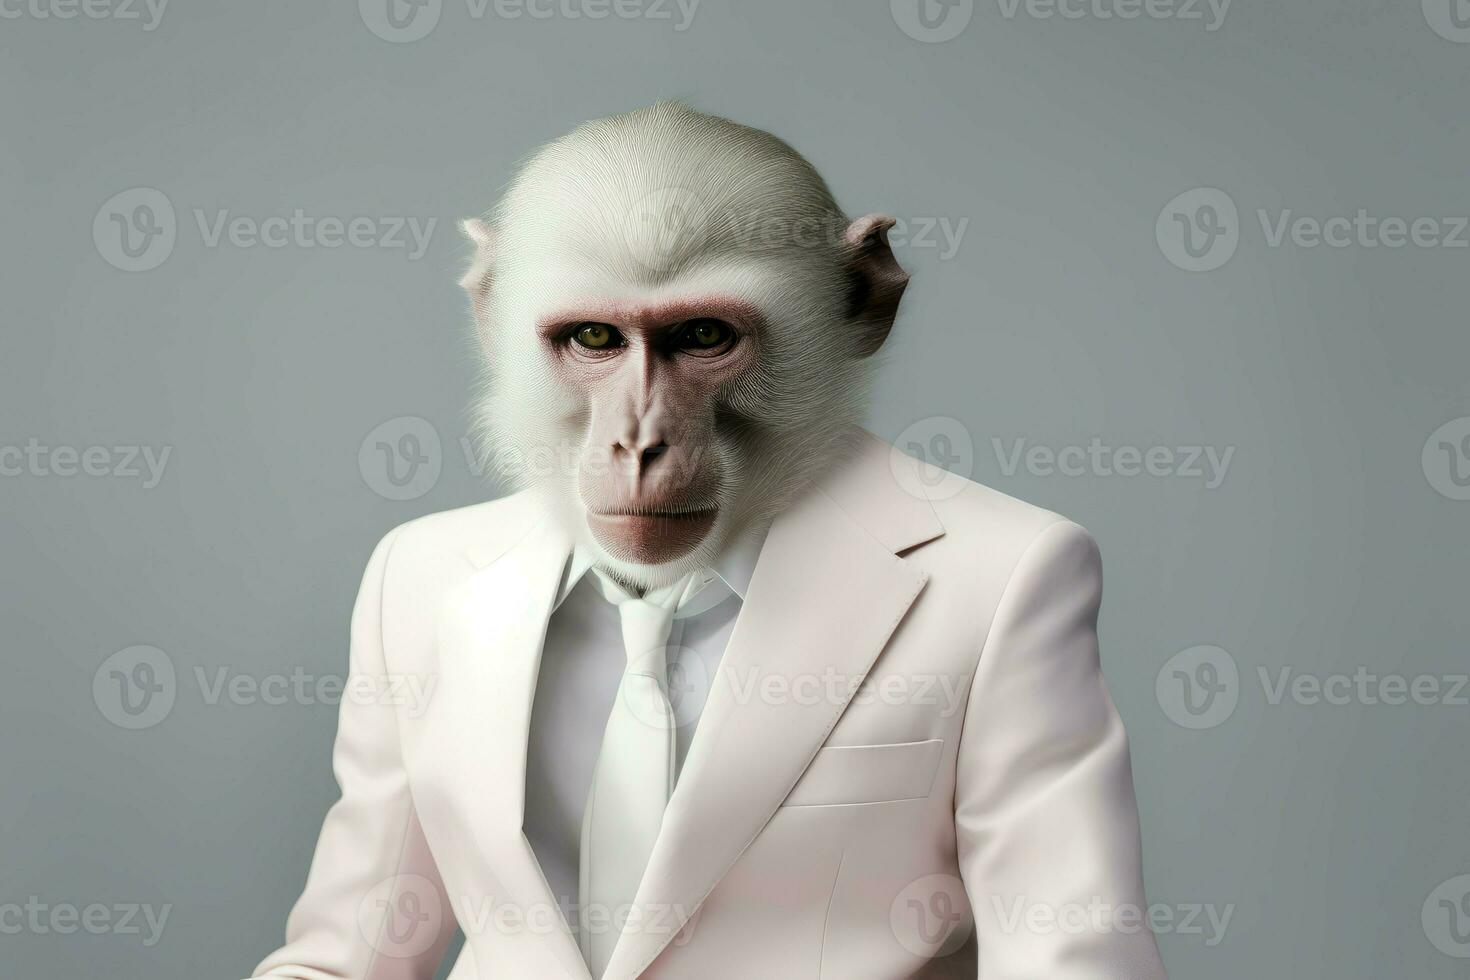 macaco branco terno escritório. gerar ai 29201174 Foto de stock no Vecteezy